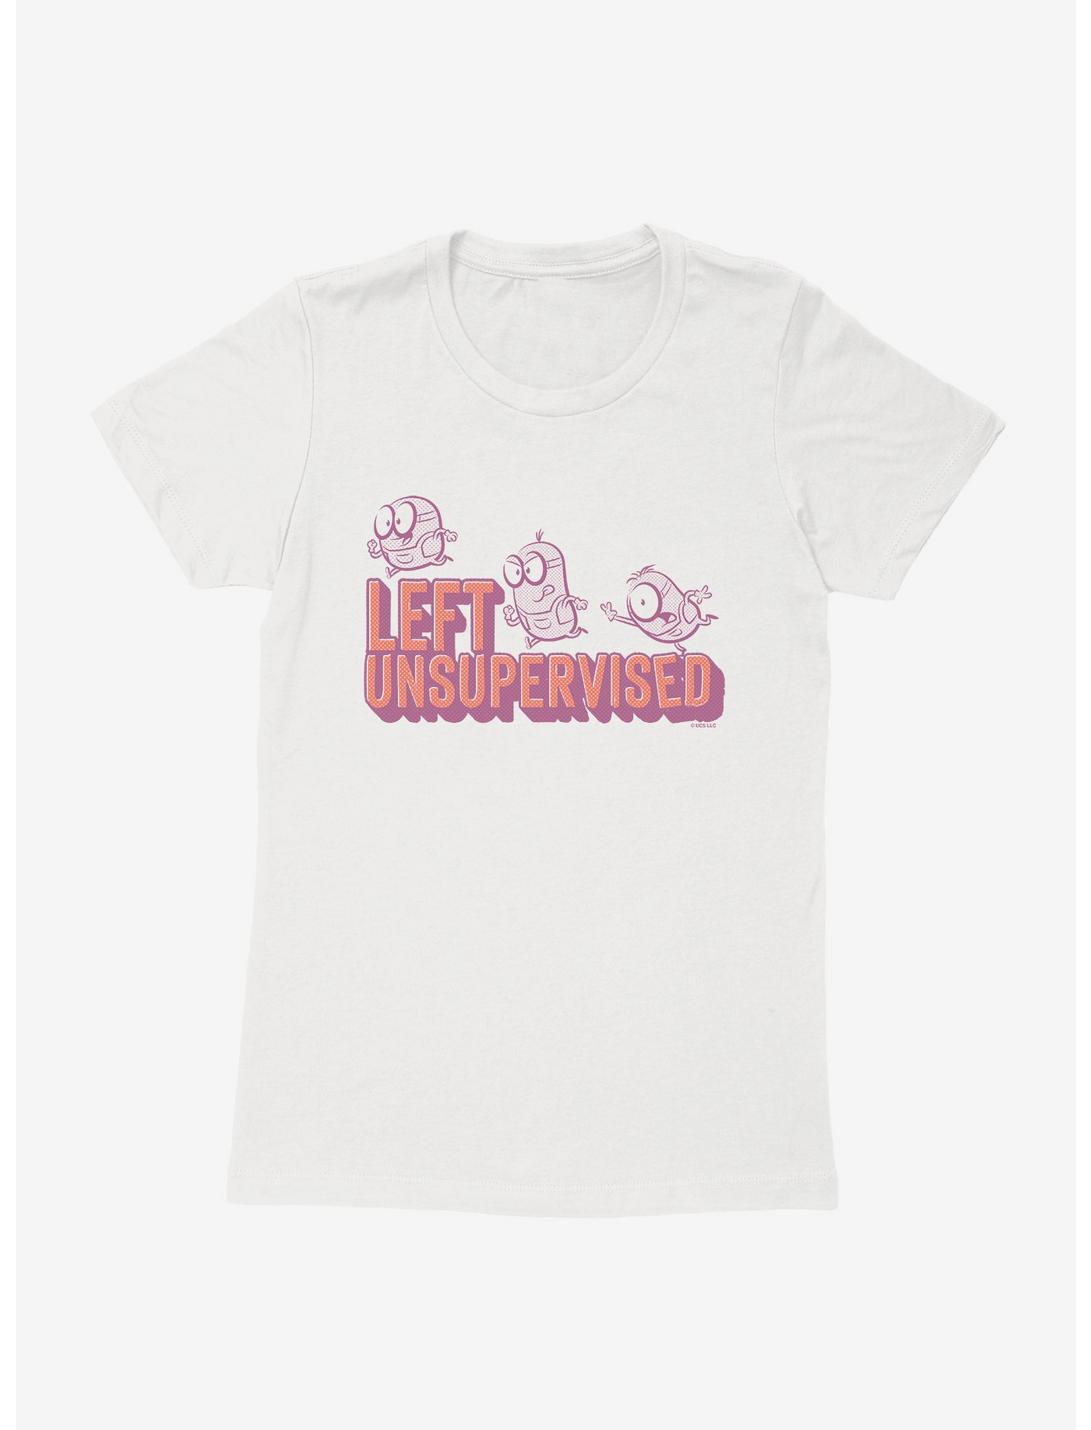 Minions Spotty Left Unsupervised Womens T-Shirt, WHITE, hi-res